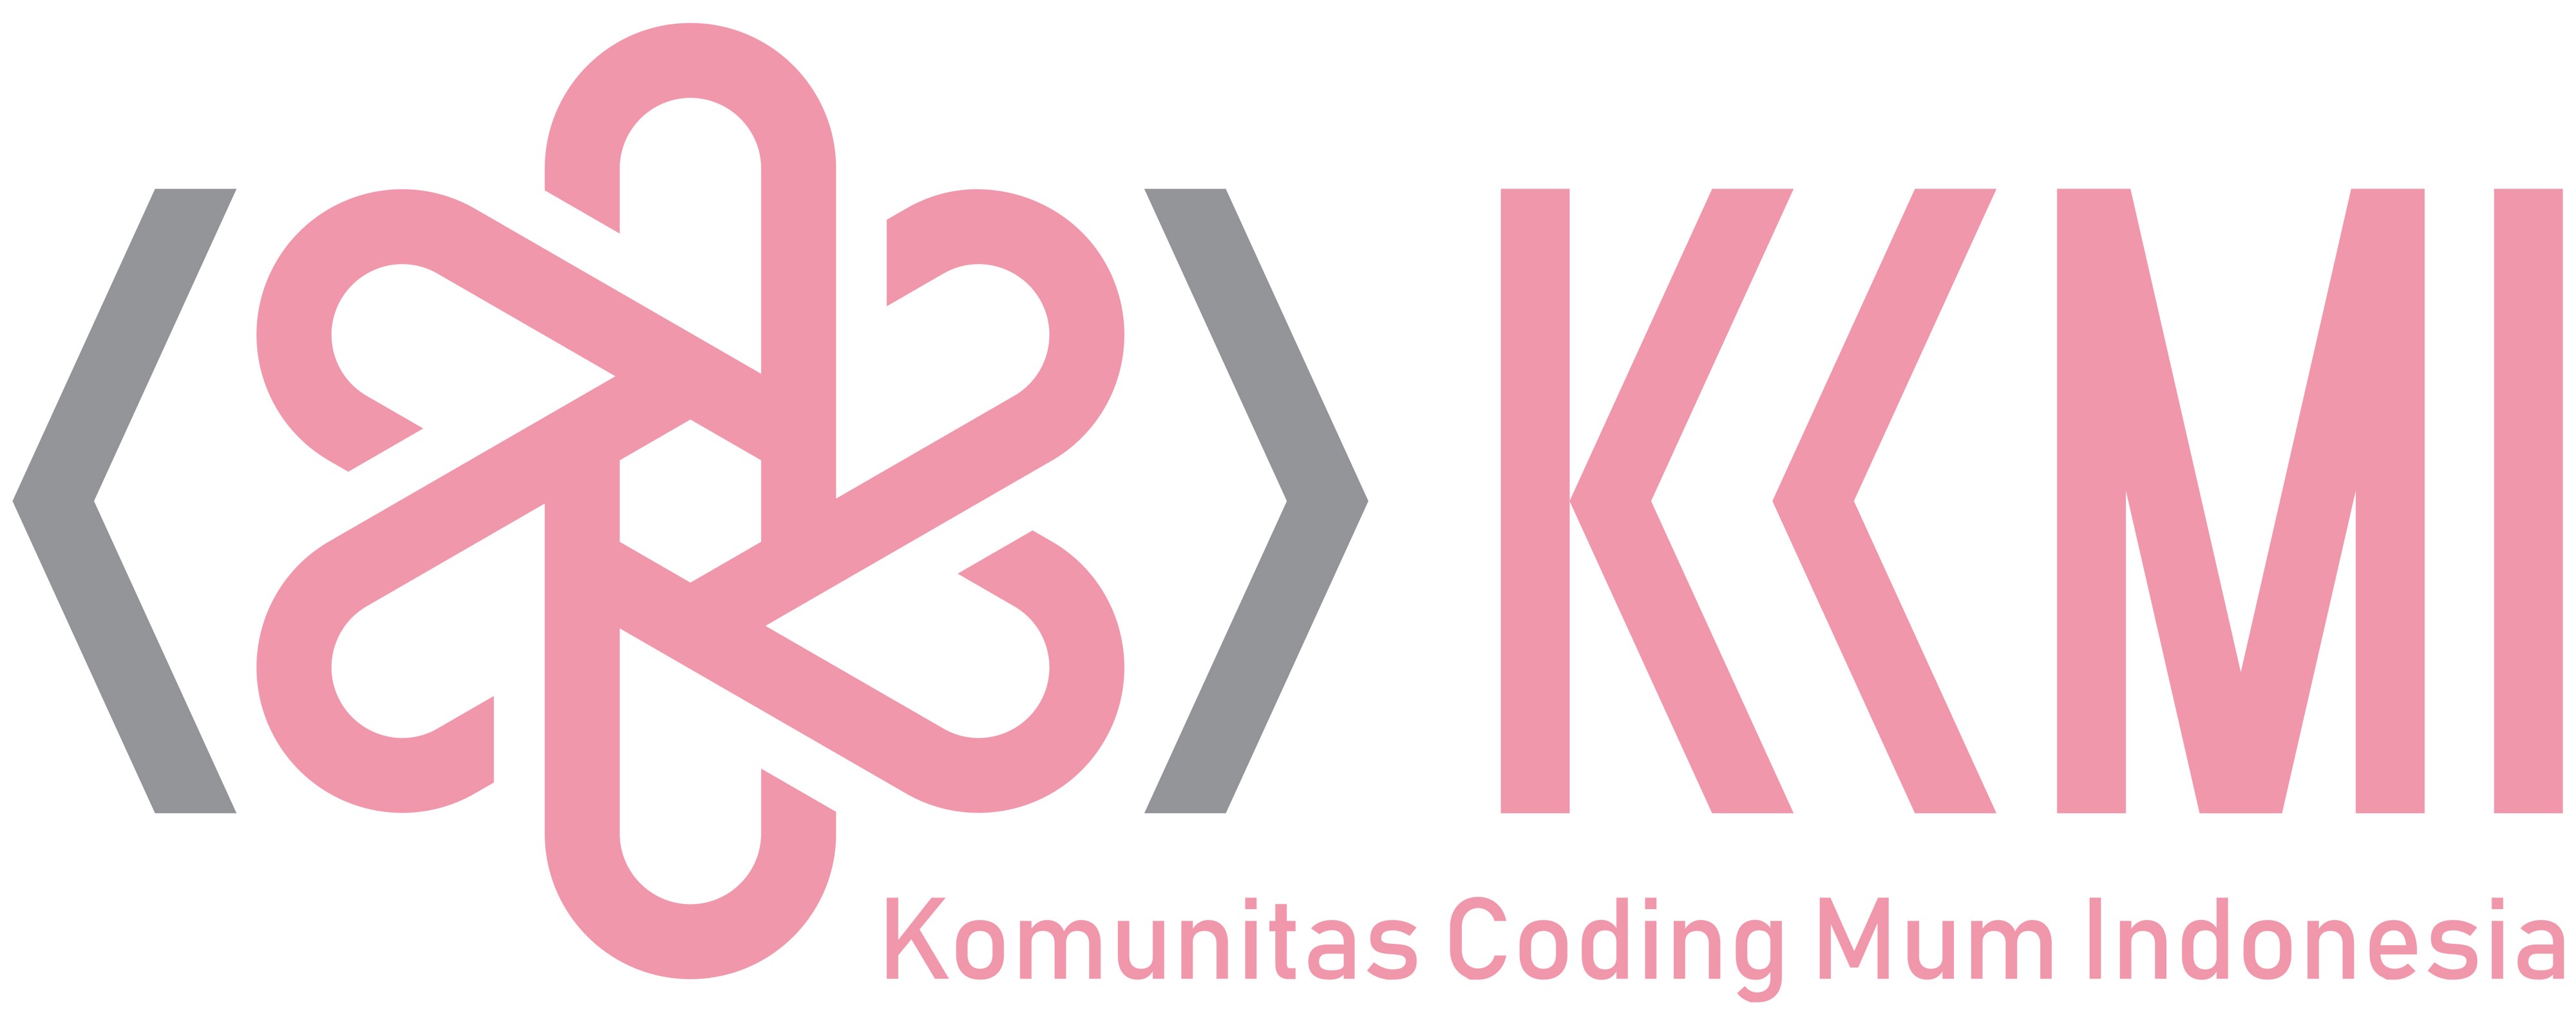 Komunitas Coding Mum Indonesia Logo